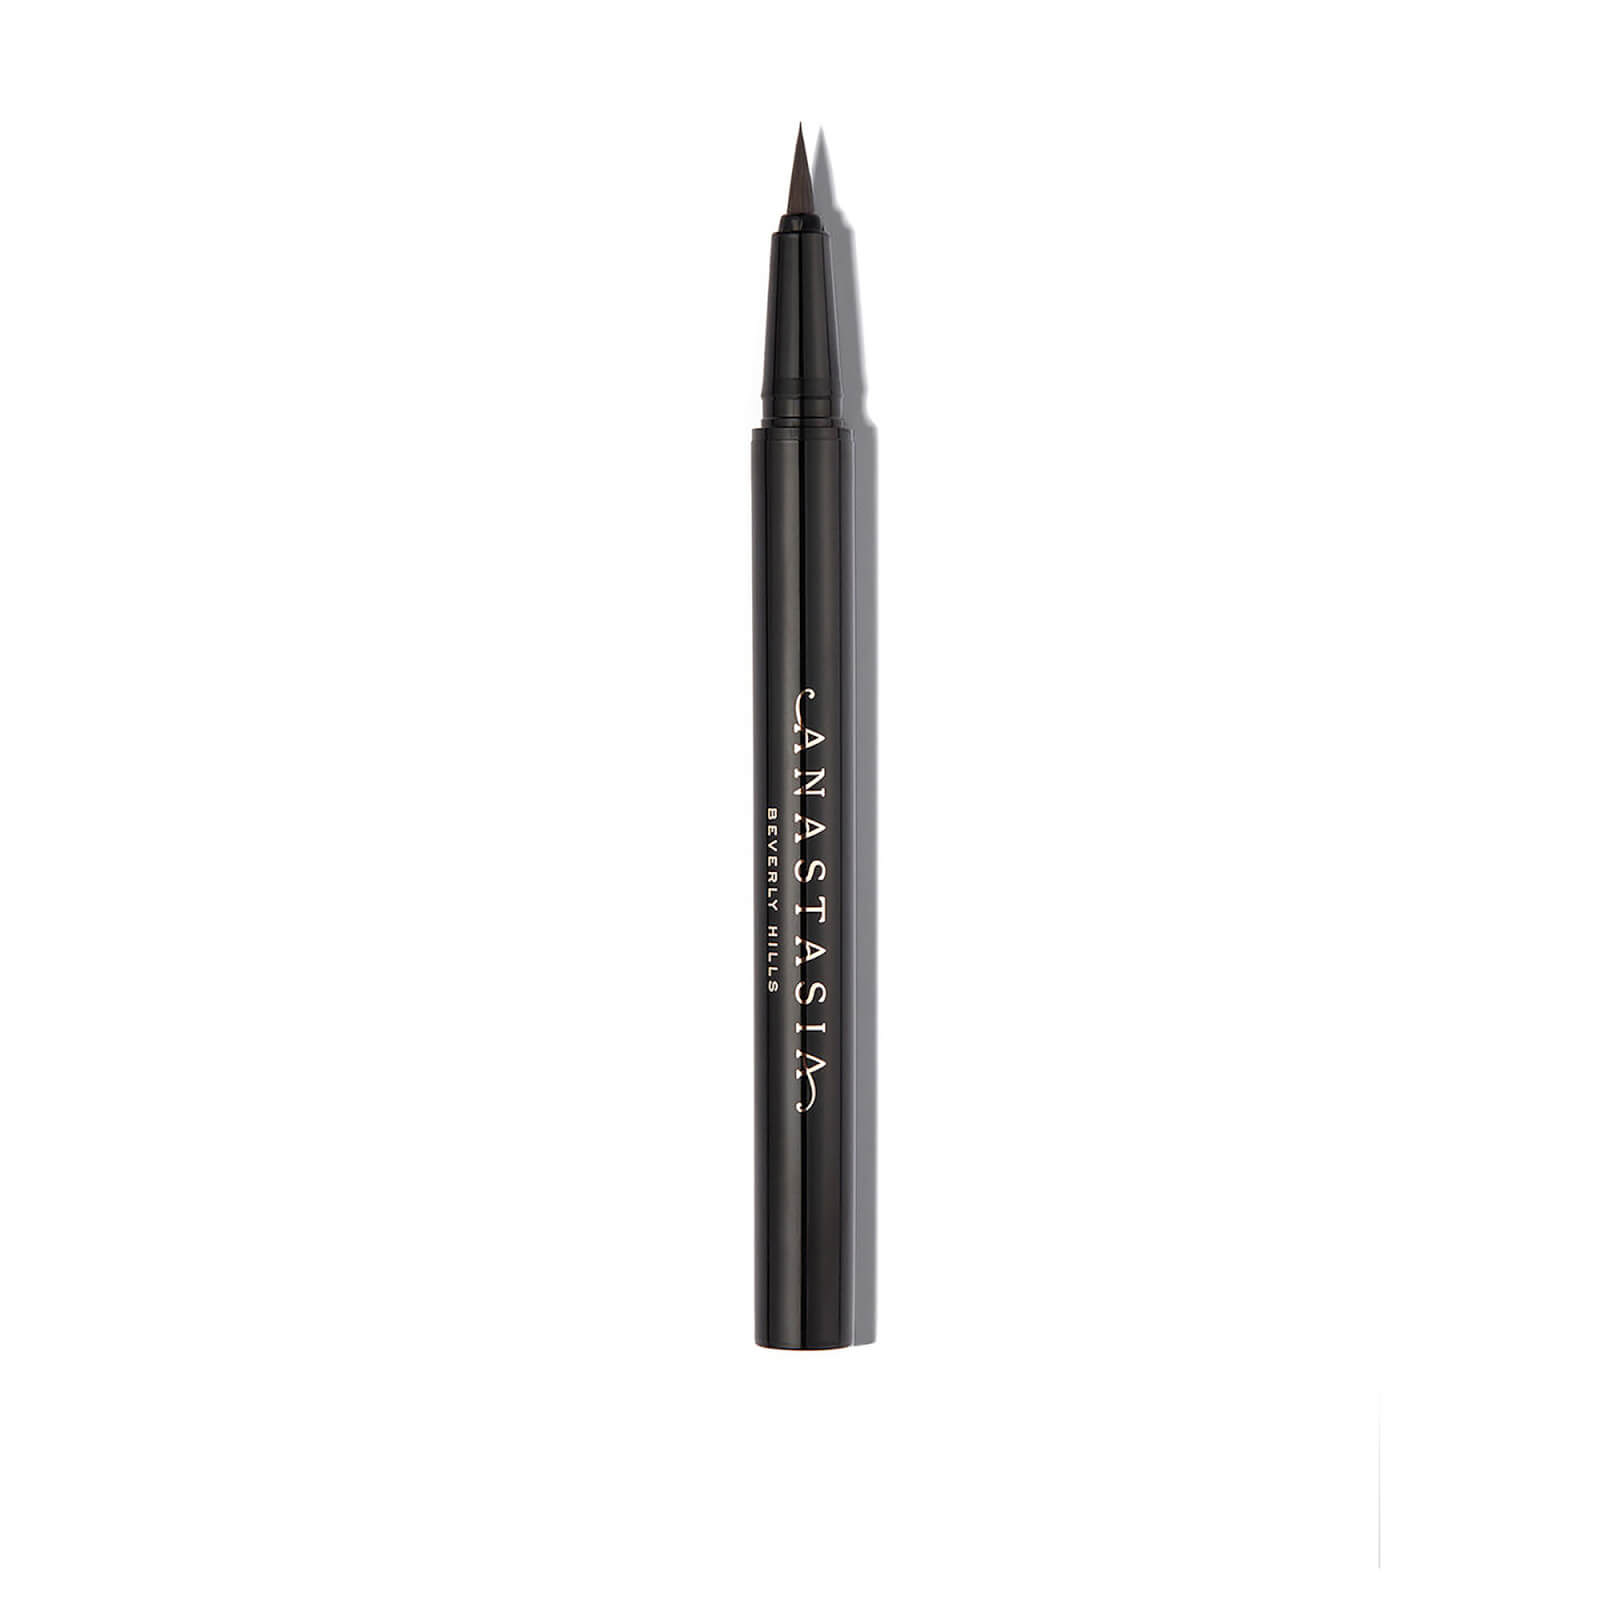 Anastasia Beverly Hills Brow Pen 0.5ml (Various Shades) - Medium Brown